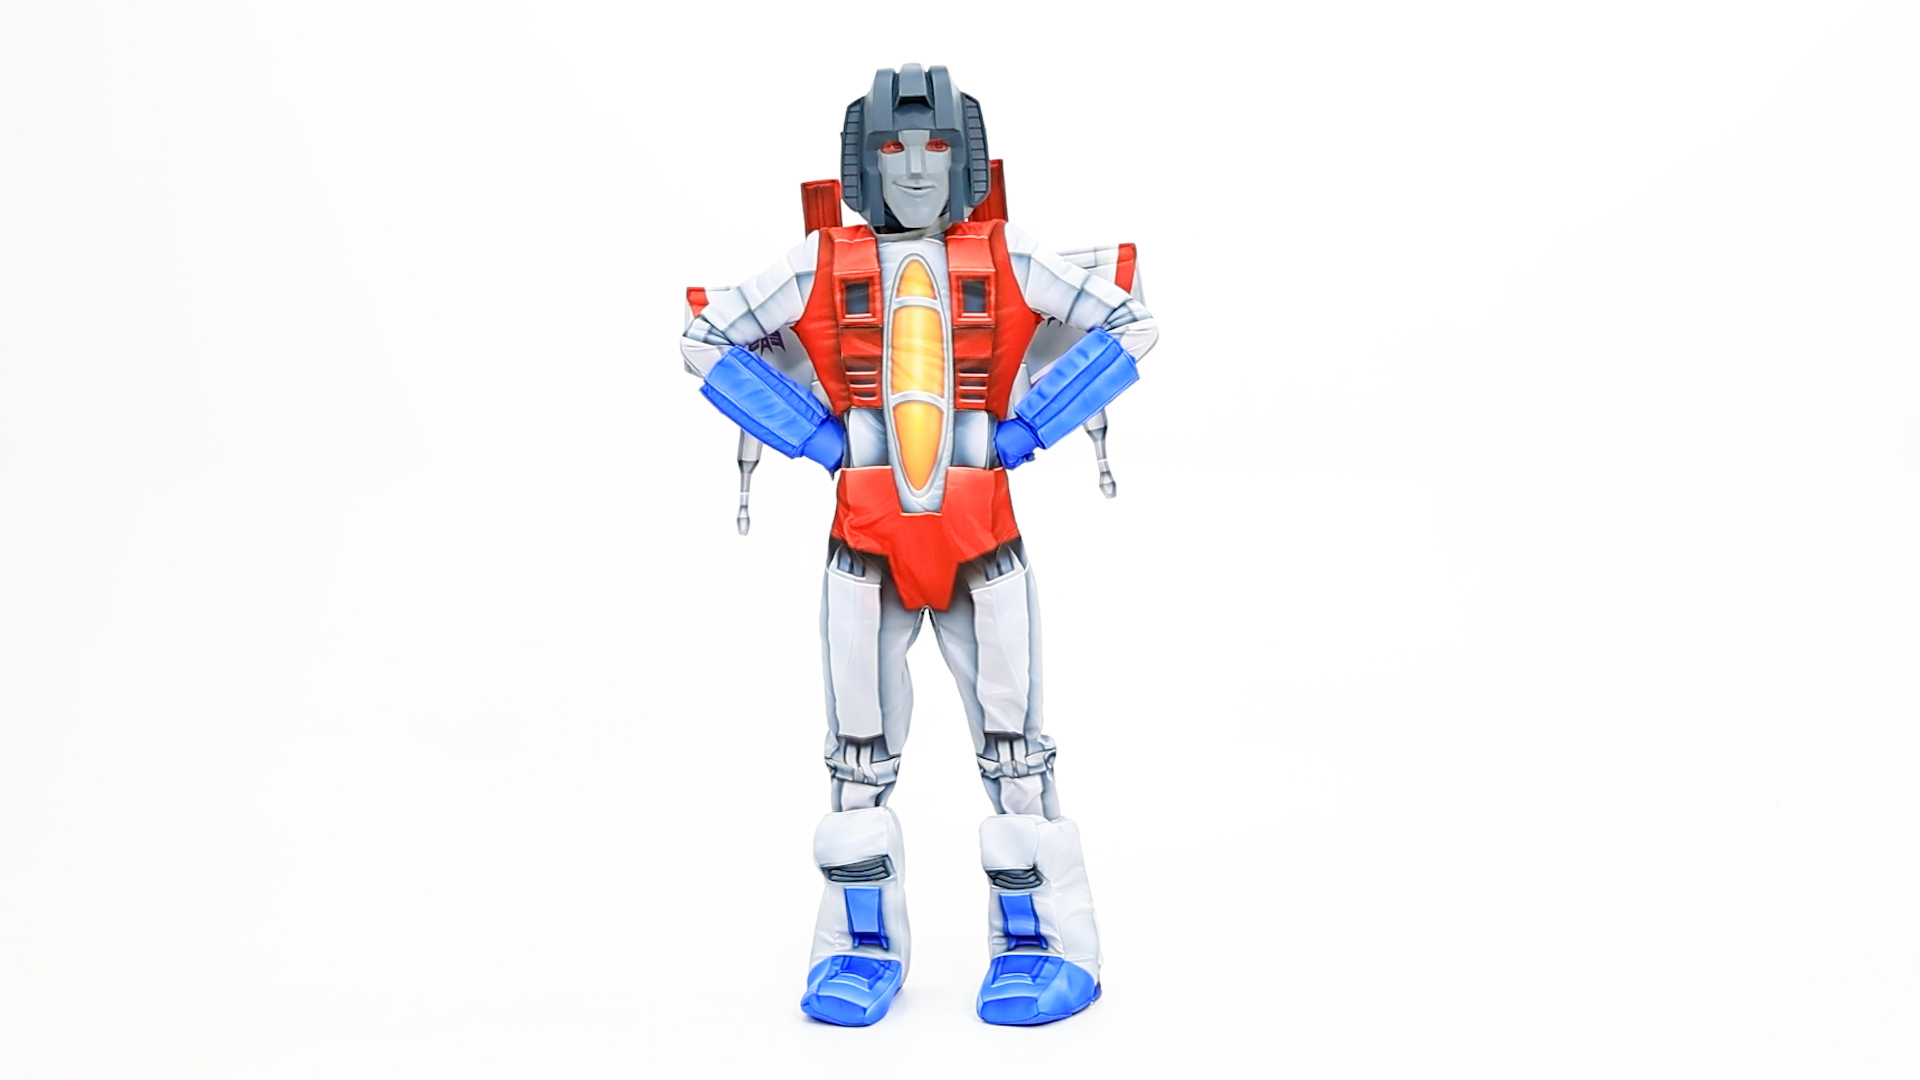 FUN2202CH Transformers Starscream Costume for Boys